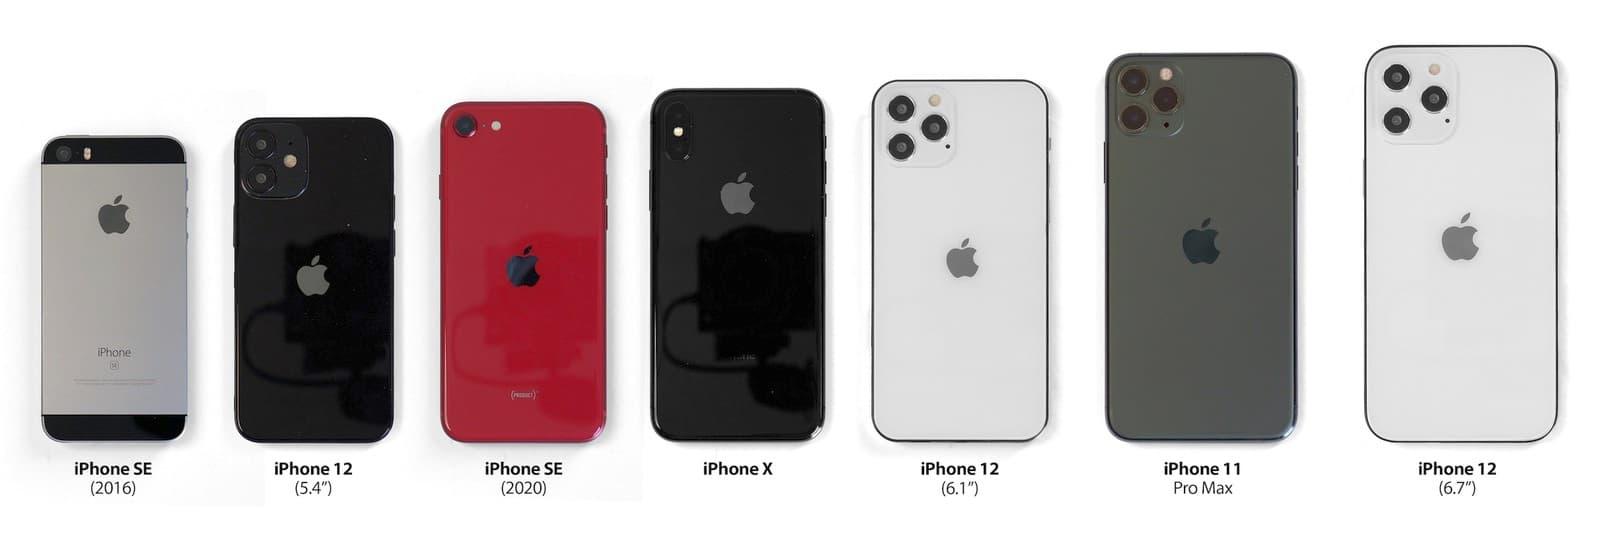 Iphone 12终于来了 苹果发布会蓝色logo透露什么 Pro